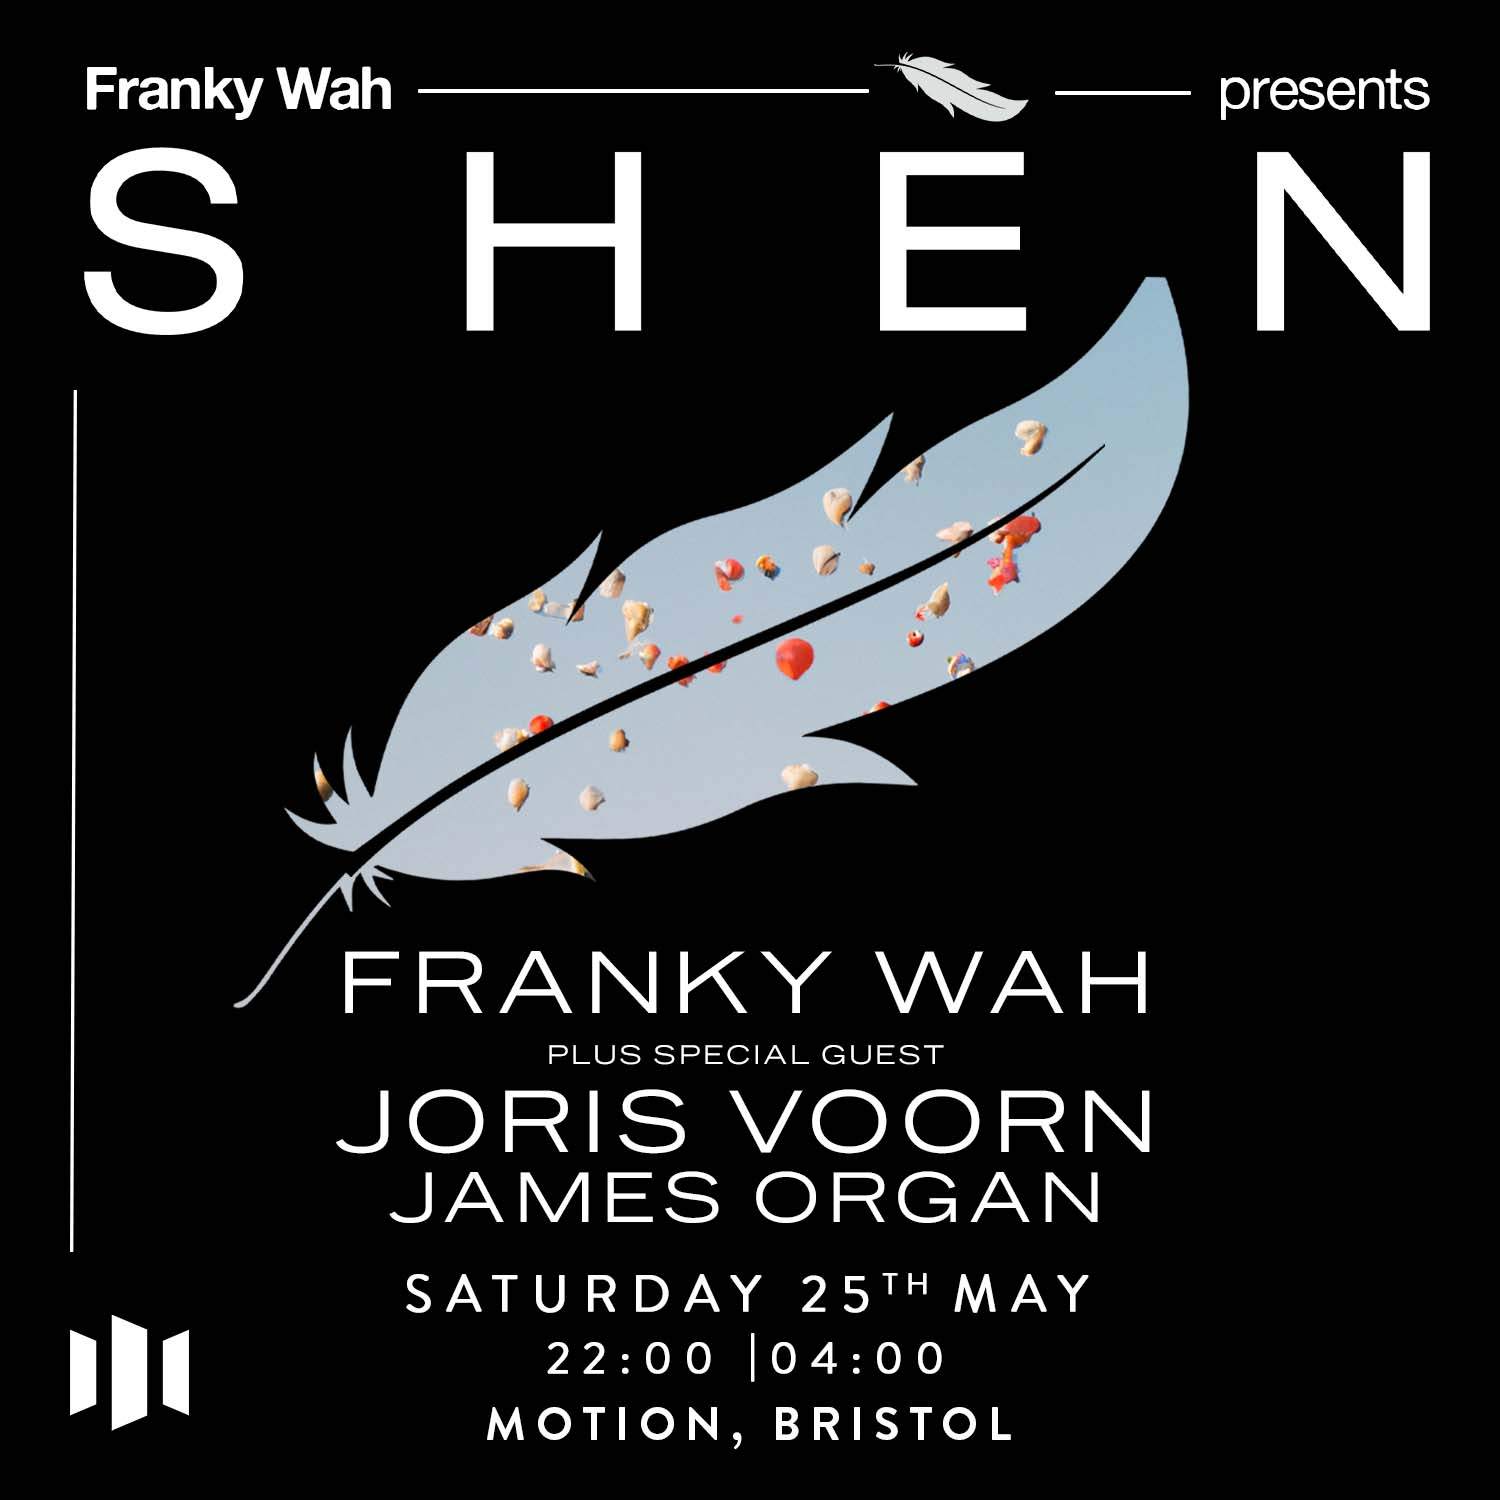 Franky Wah presents: SHÈN Bristol with Special Guest Joris Voorn - フライヤー裏